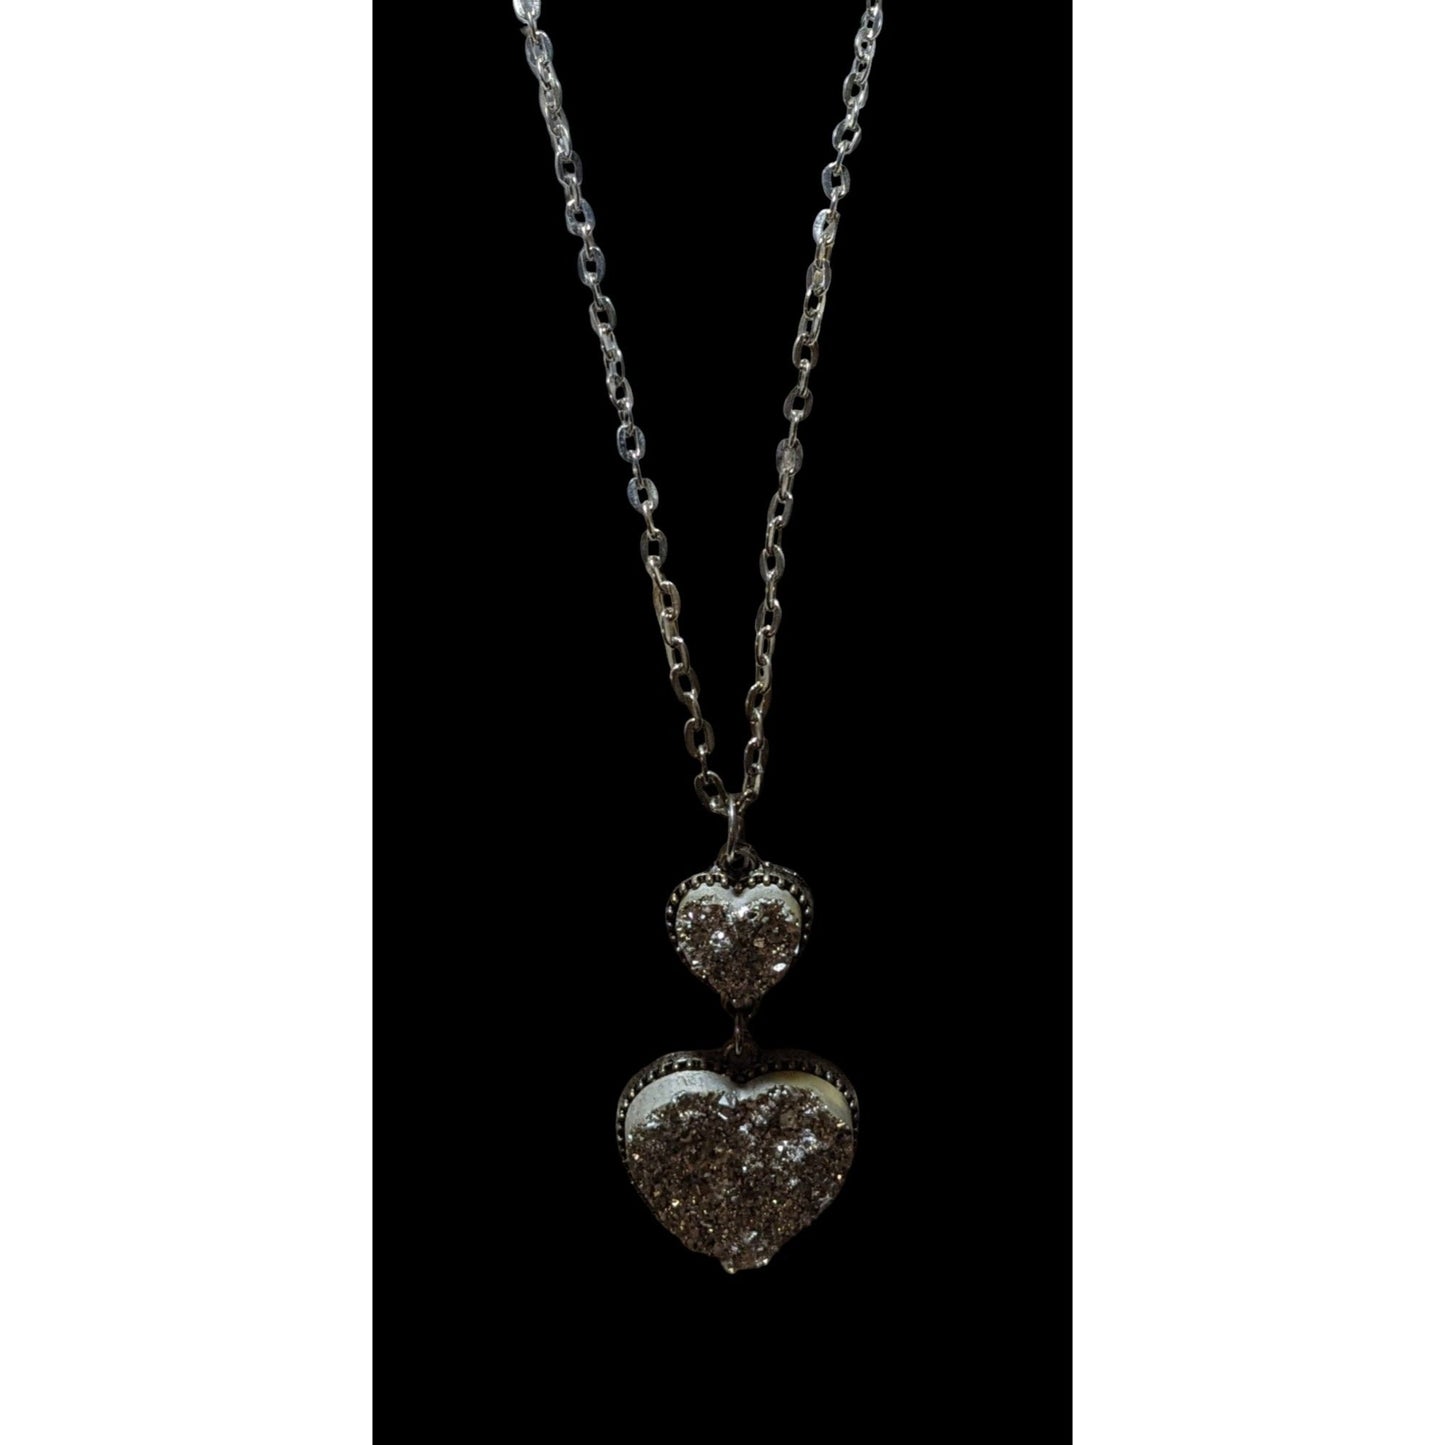 Silver Druzy Double Heart Necklace